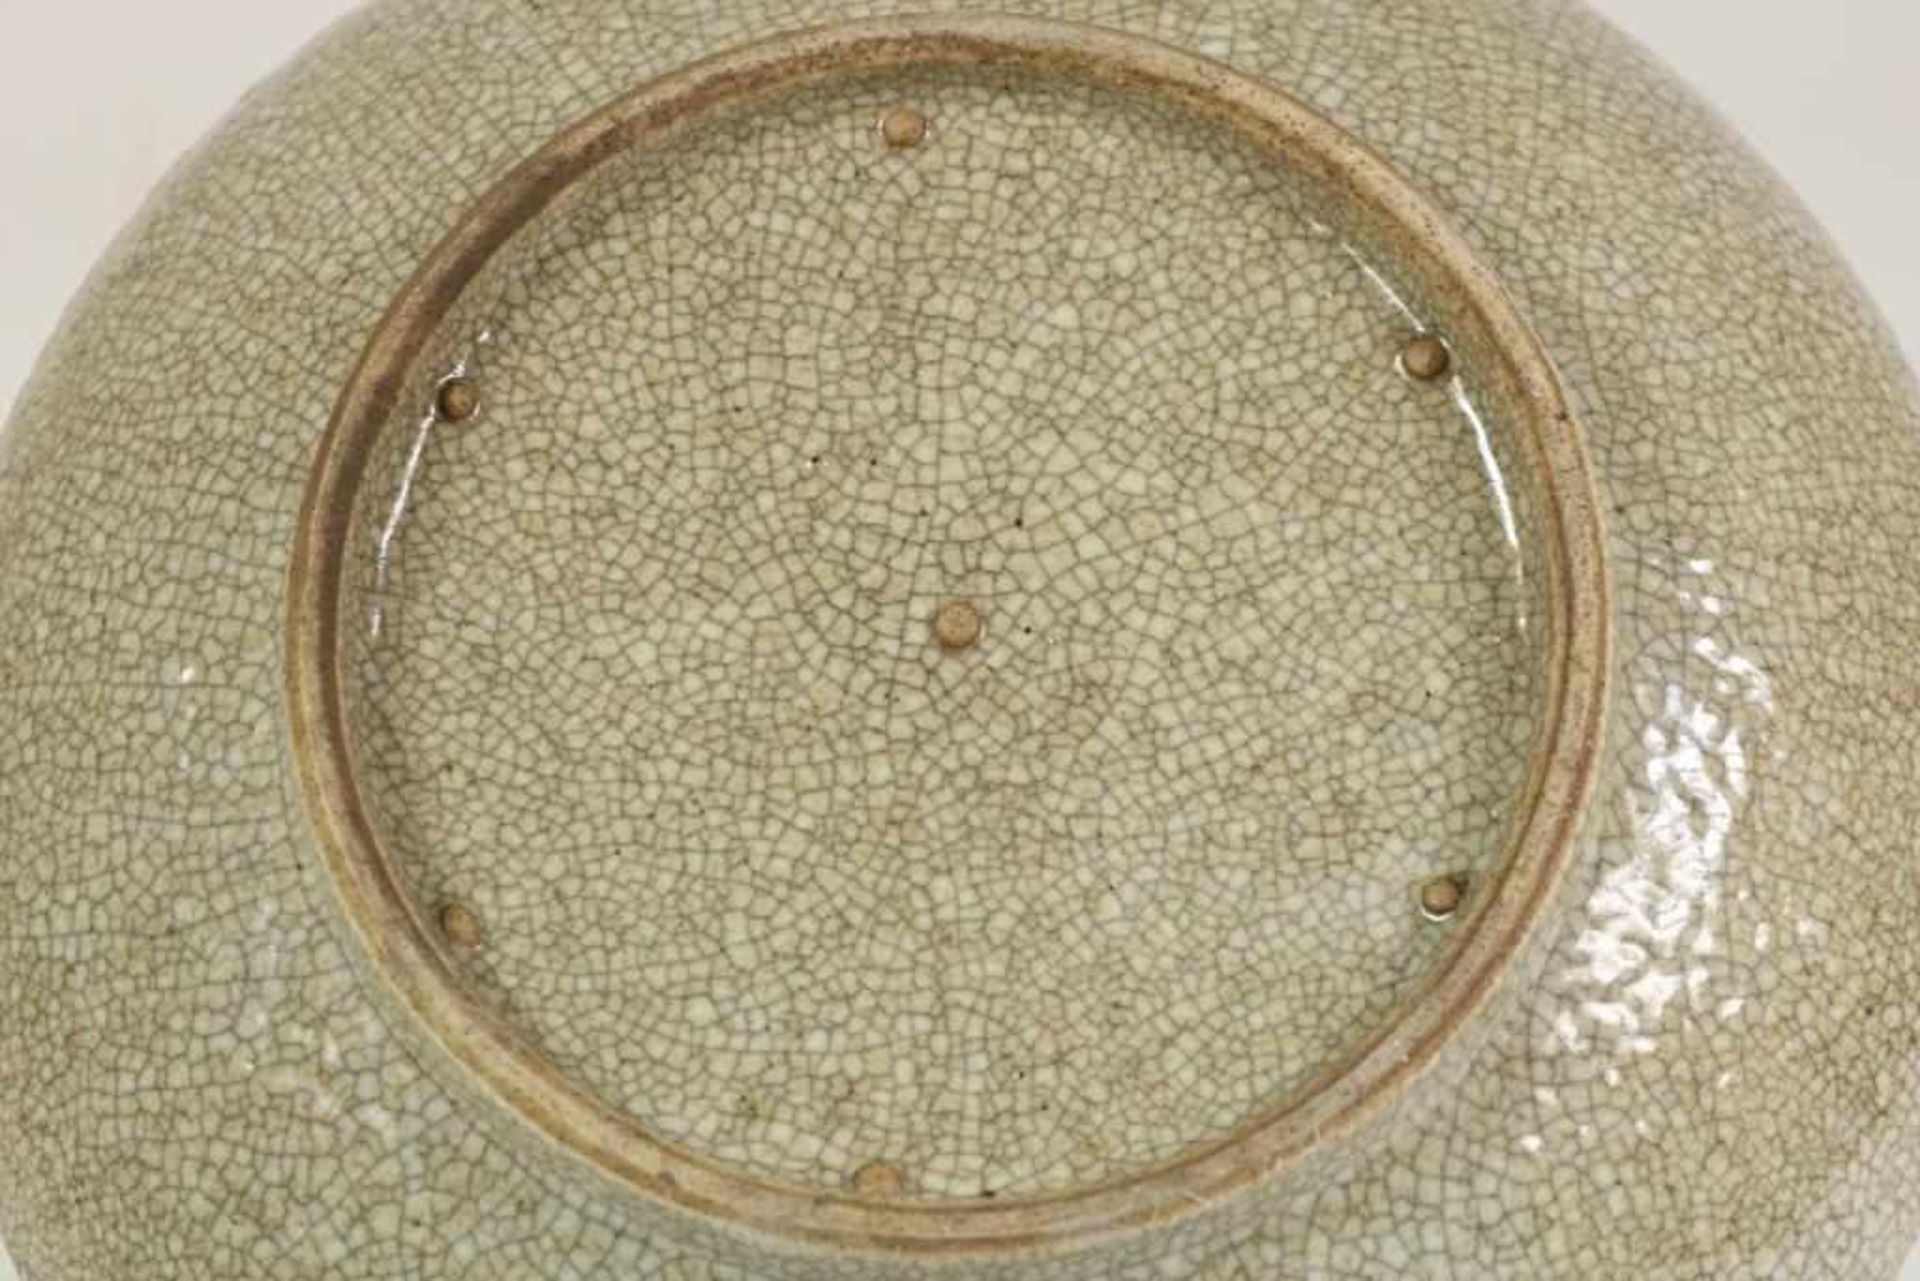 Porseleinen celedon schaal, China vermoedelijk 18e eeuw, diam. 24 cm. - Bild 3 aus 3